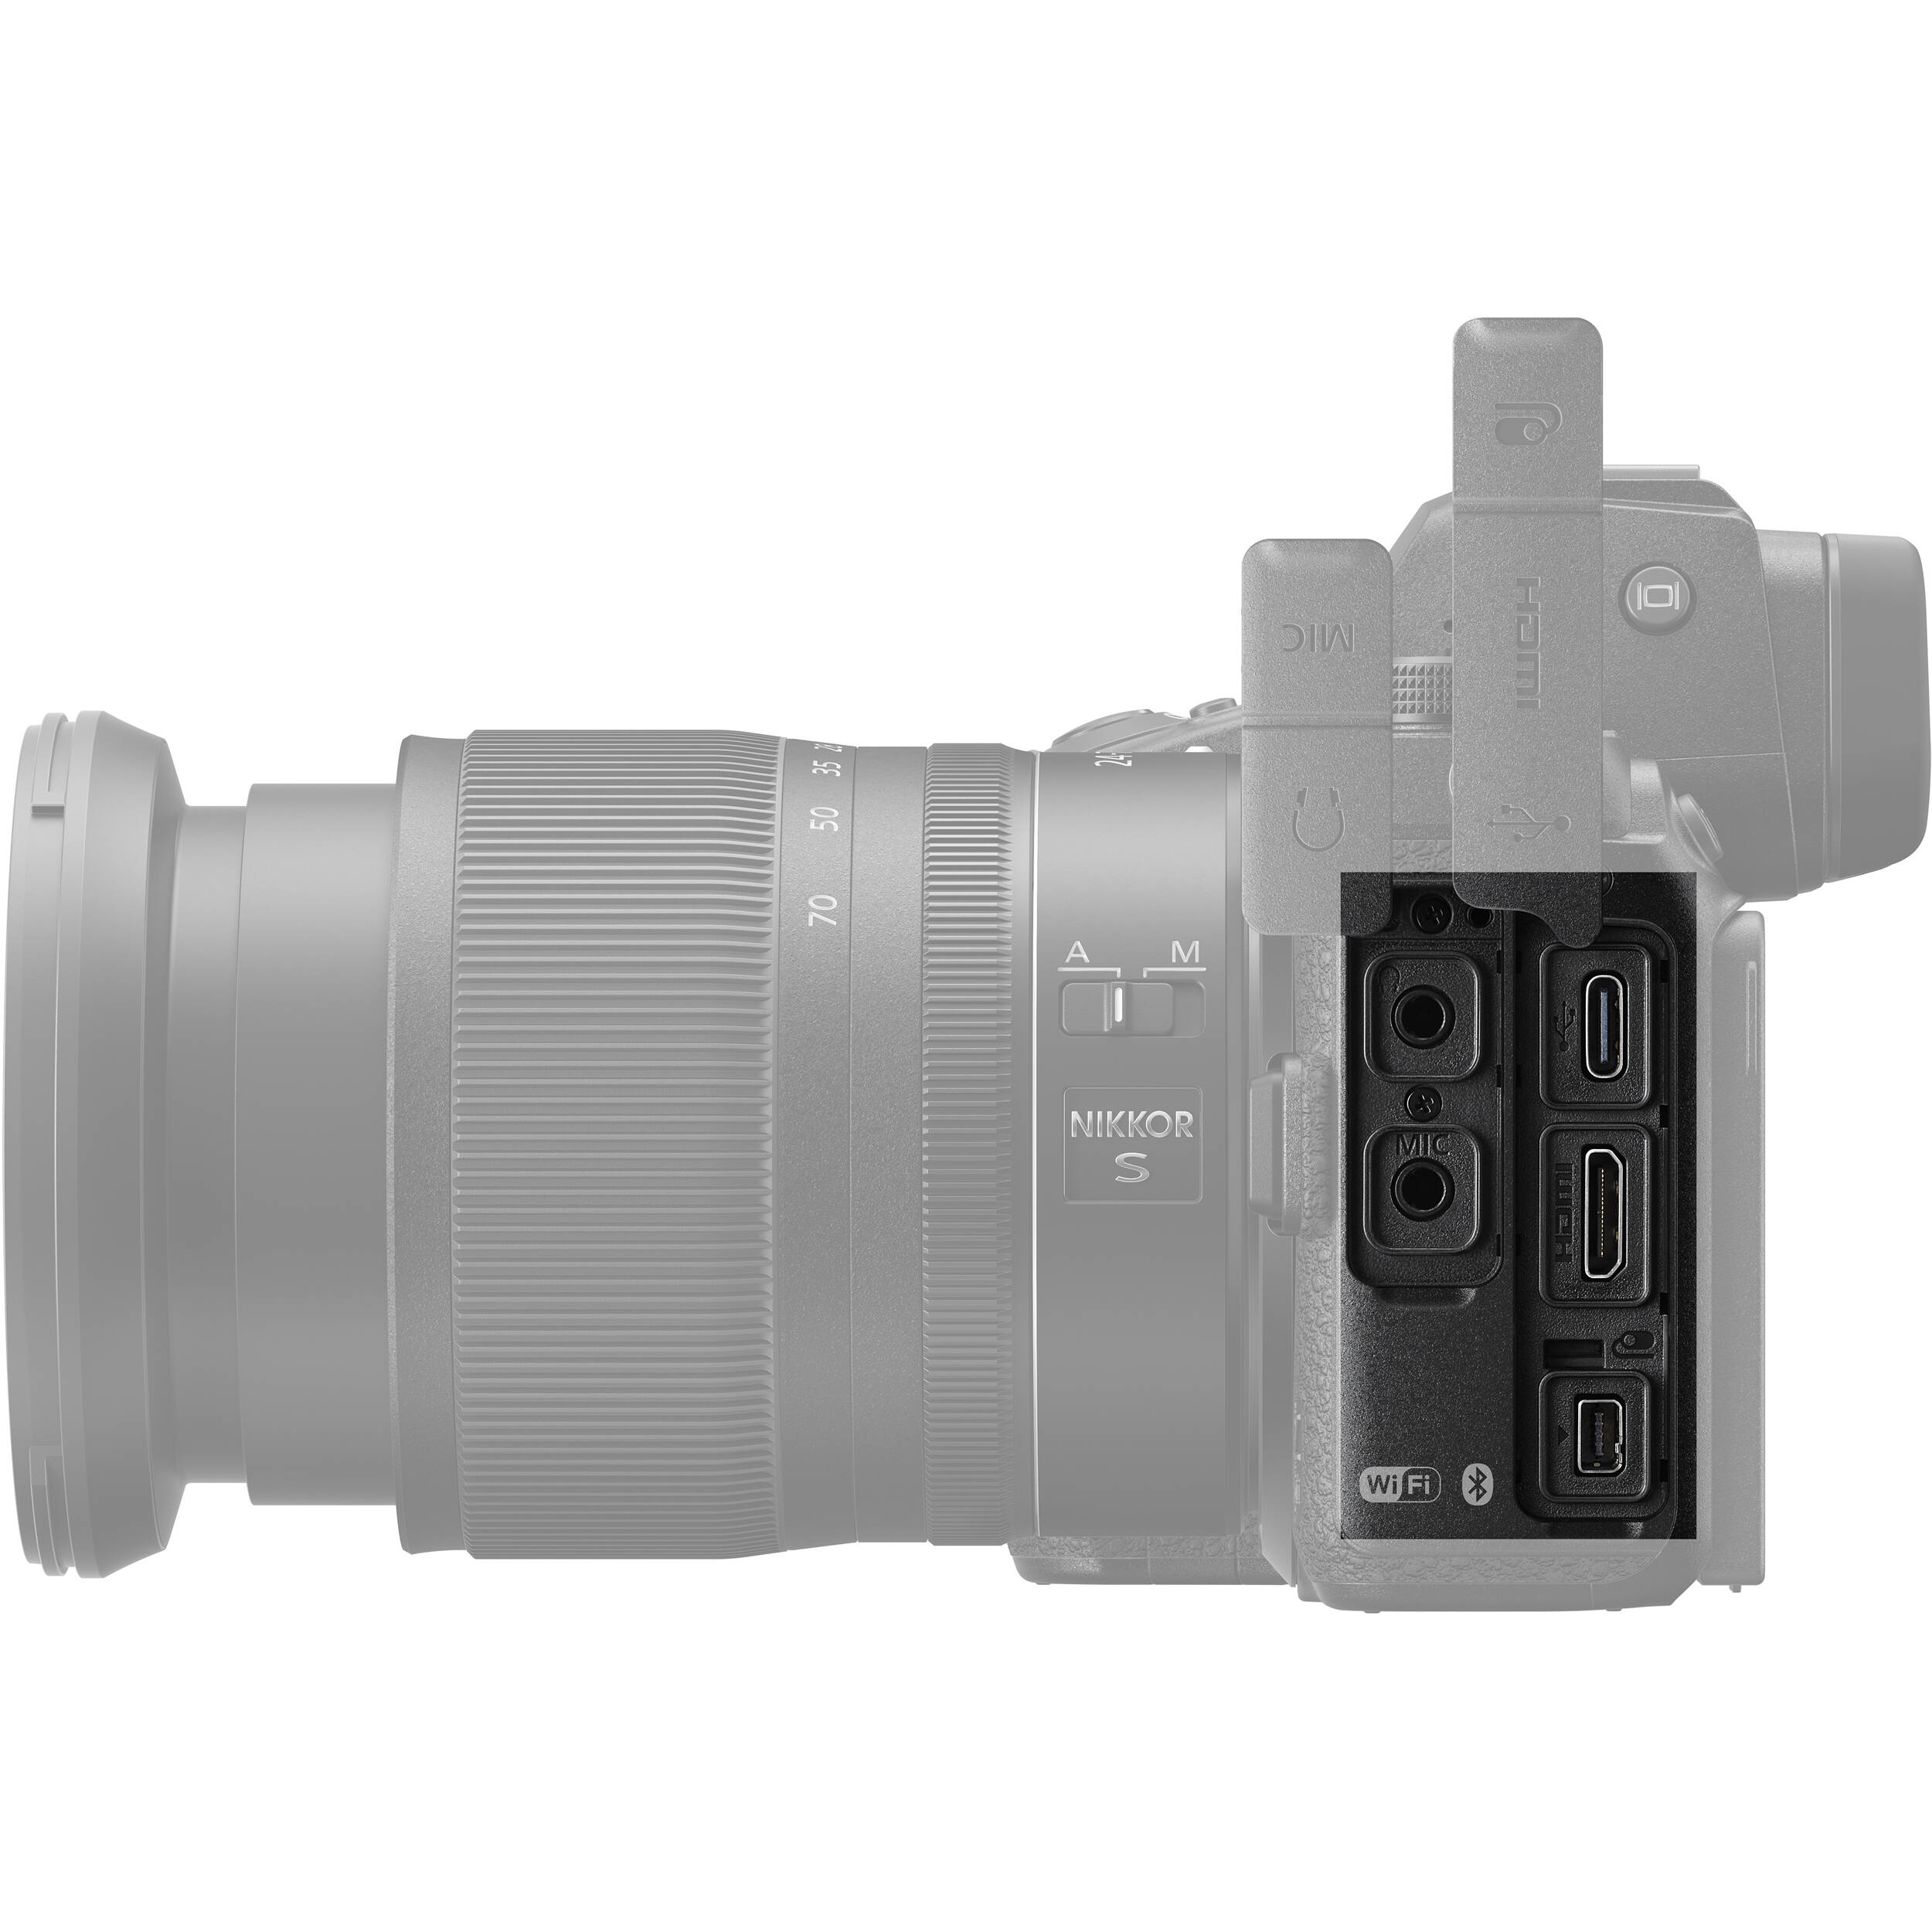 Nikon z6 ii - Quay phim 4K UHD 60p